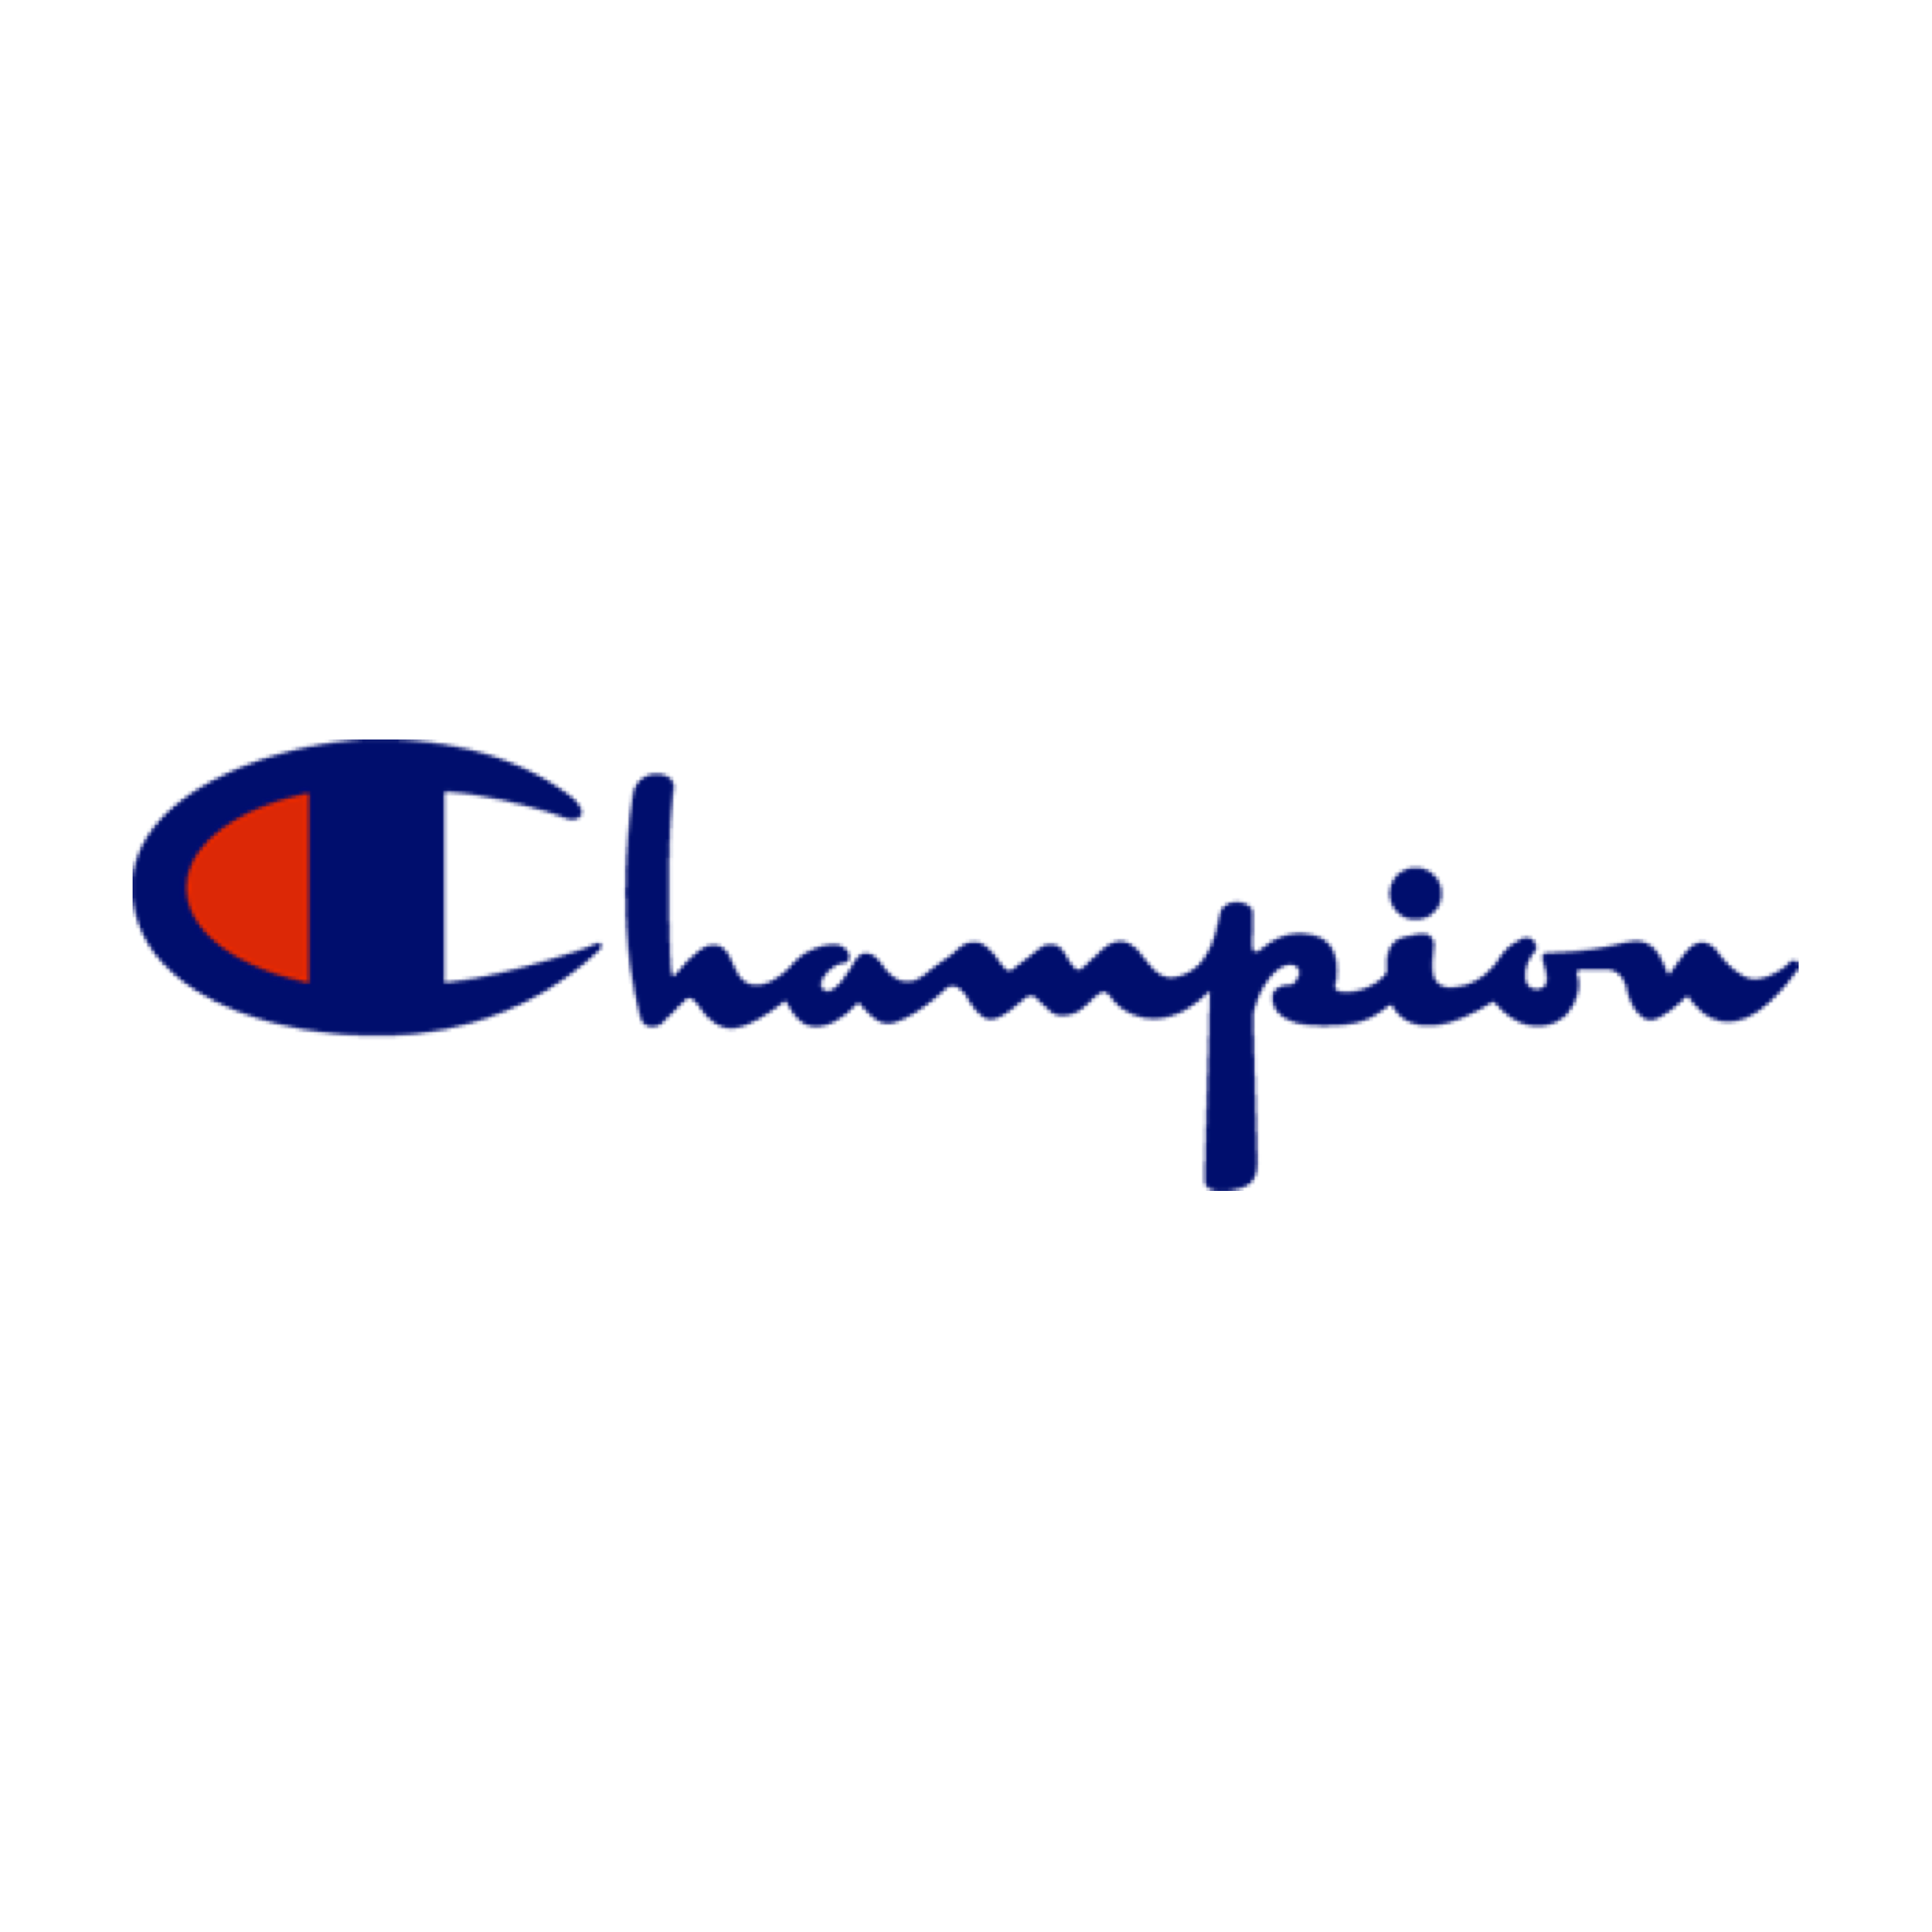 Champion Clothing Logo - Champion | BRANDS in 2019 | Champion logo, Champion, Logos